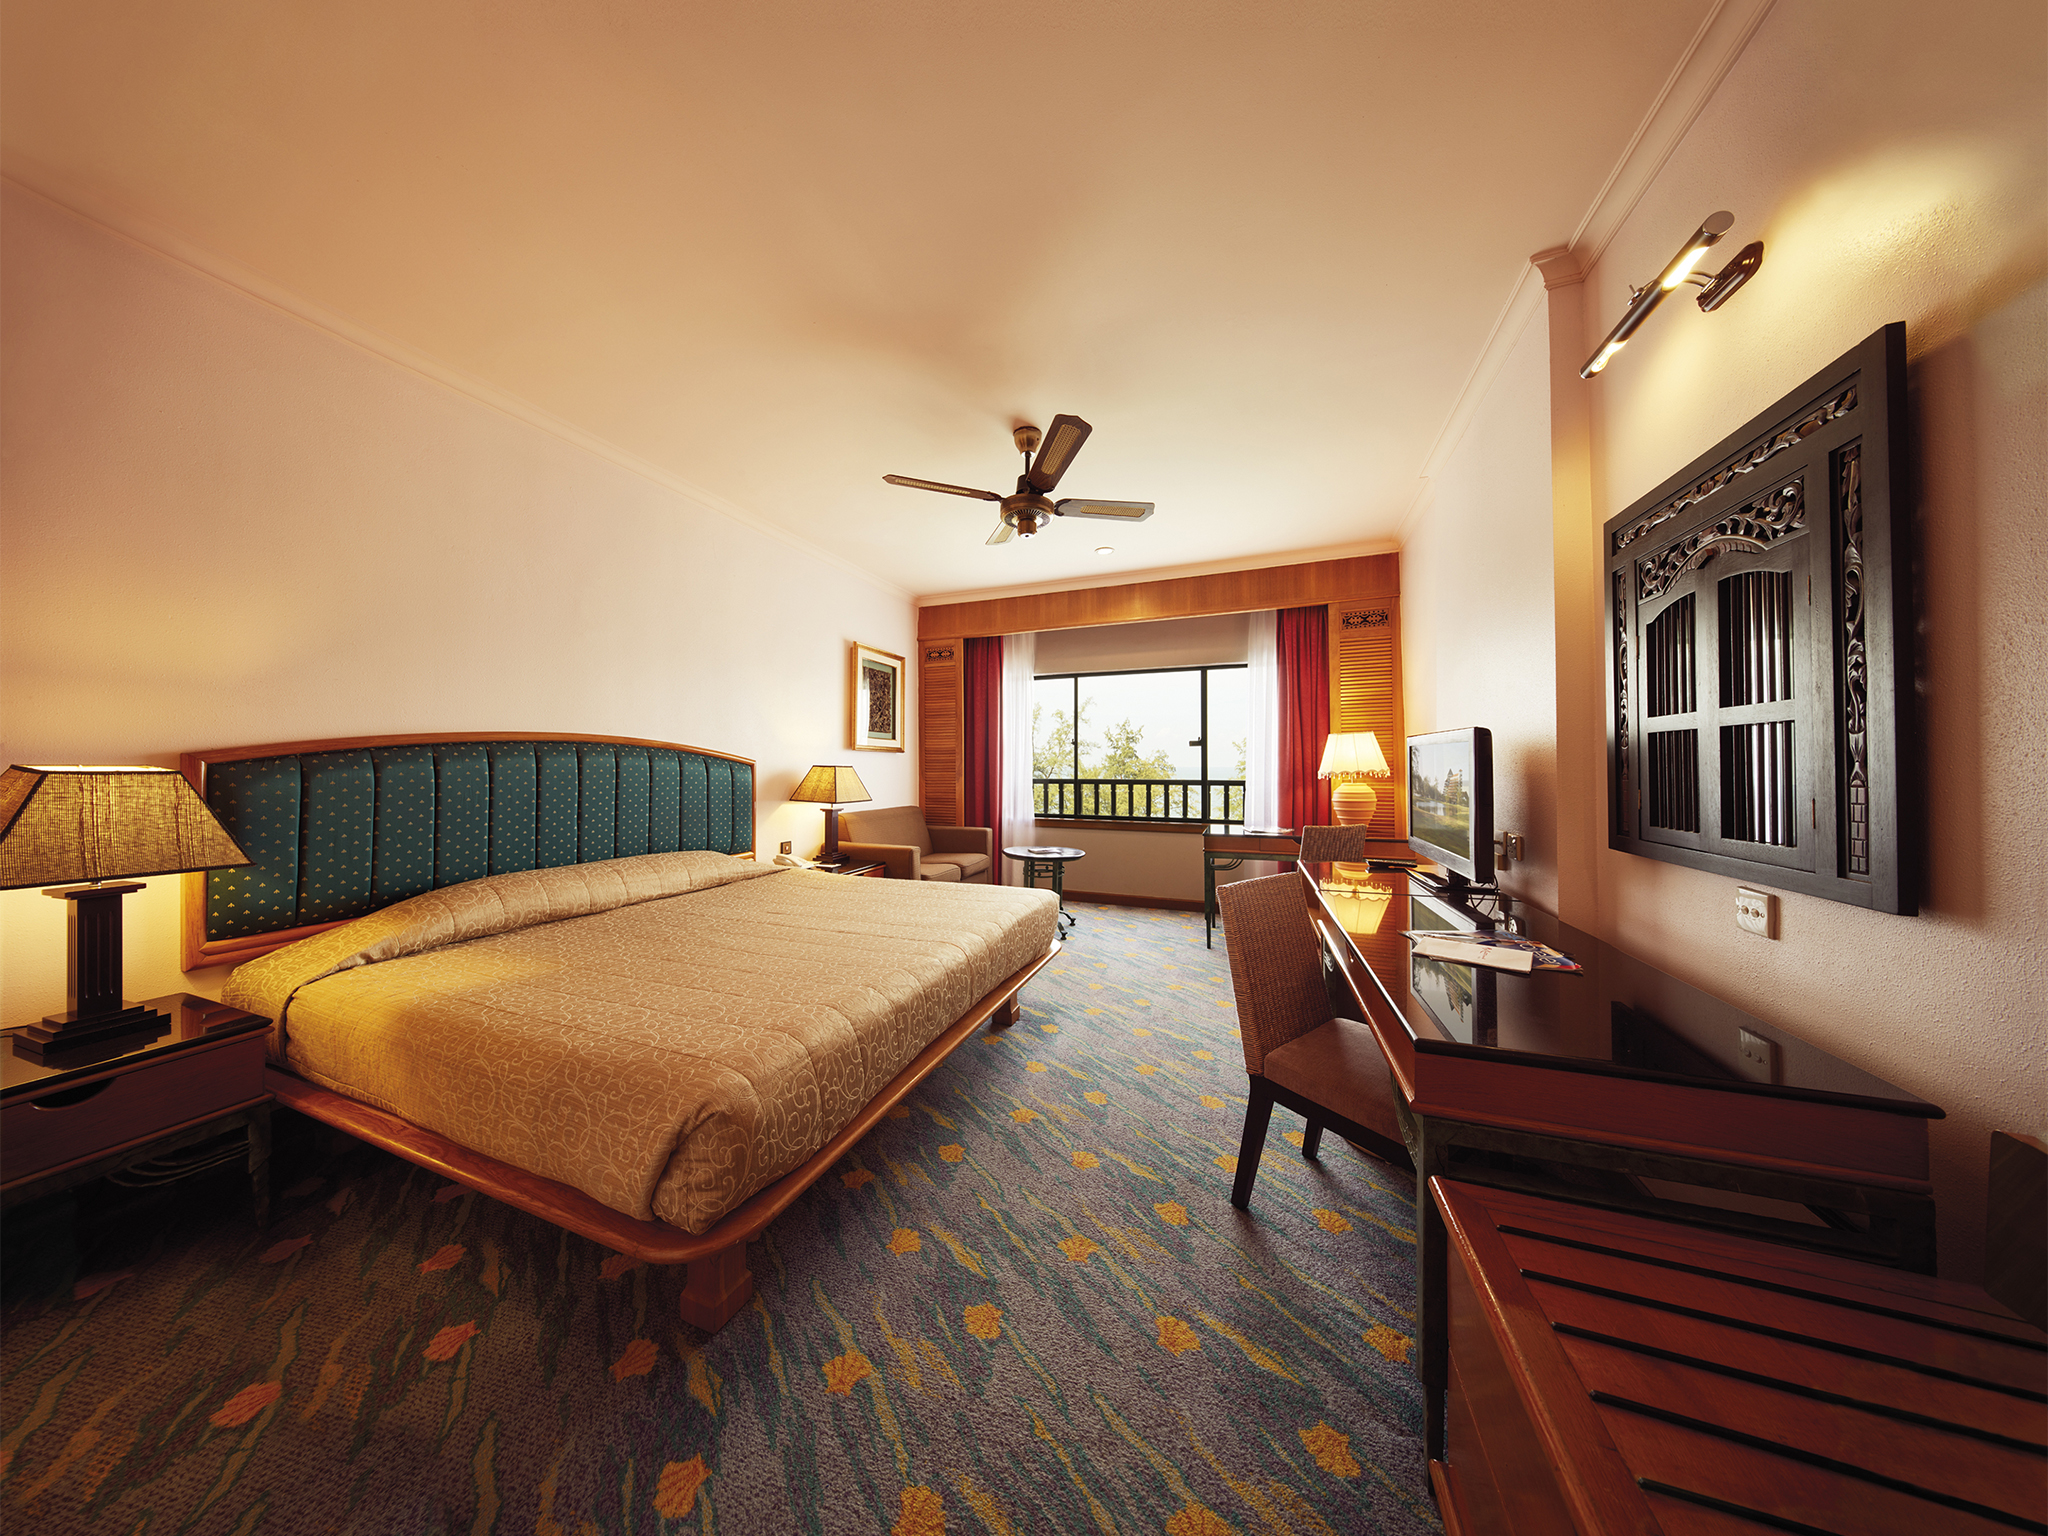 Resorts World Kijal, Kemaman @OMR 18 - Resorts World Kijal Price, Address &  Reviews